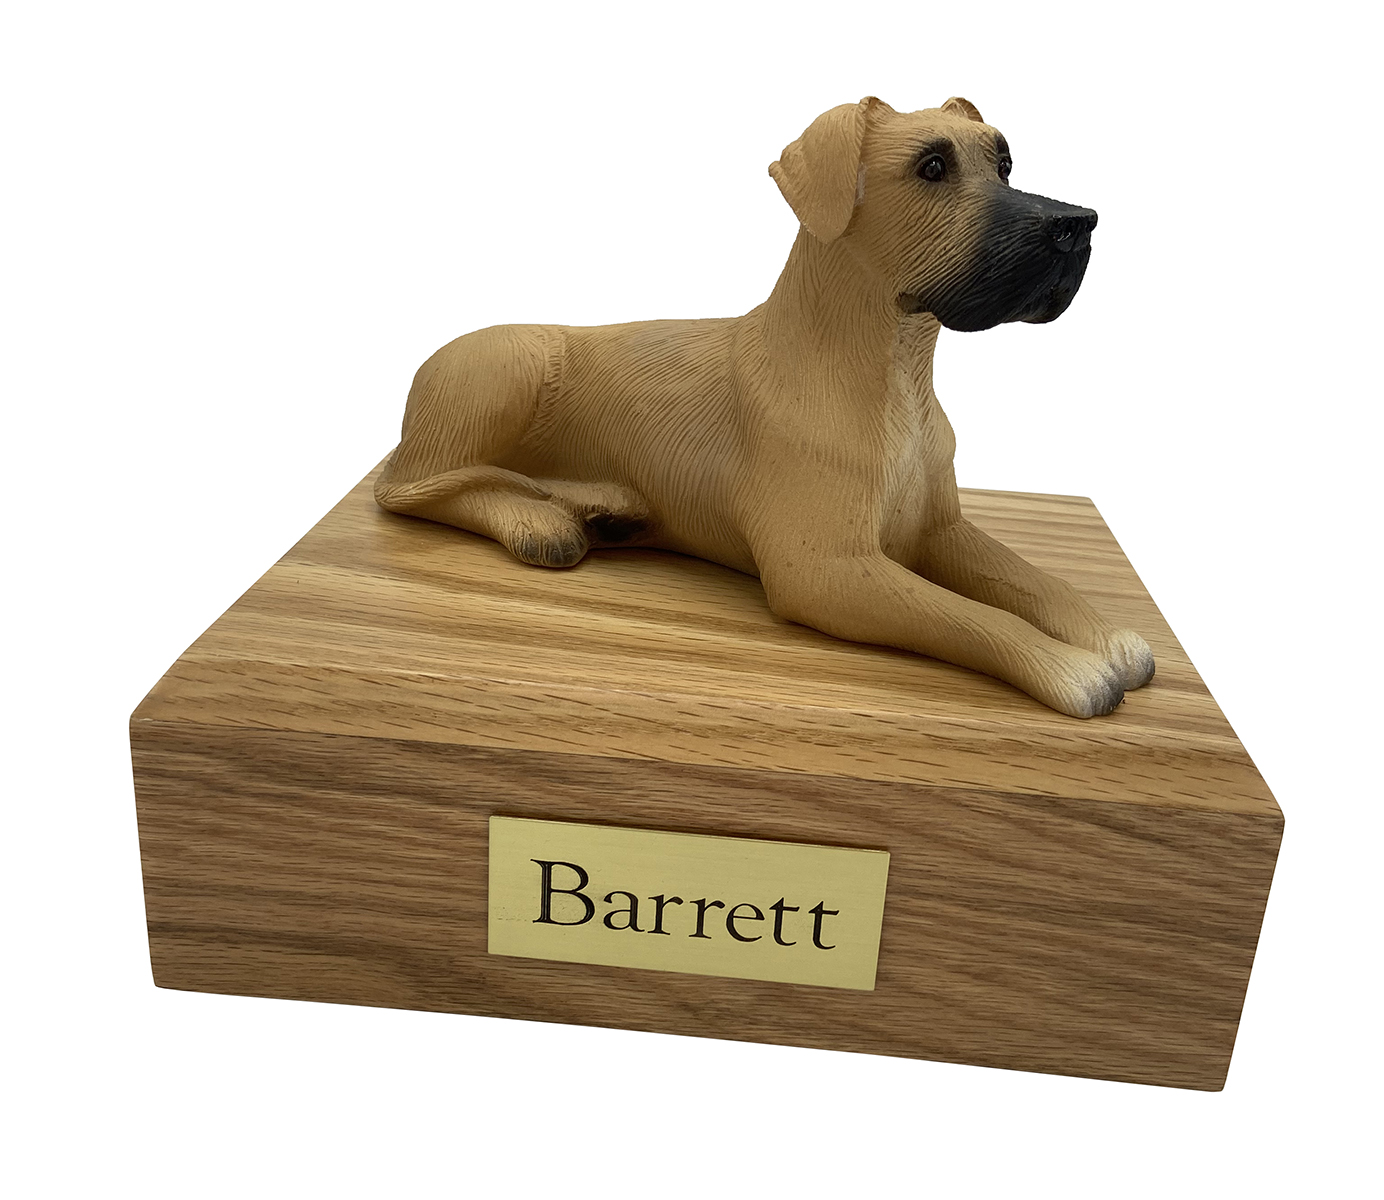 Dog, Great Dane, Fawn (Ears Down) - Figurine Urn